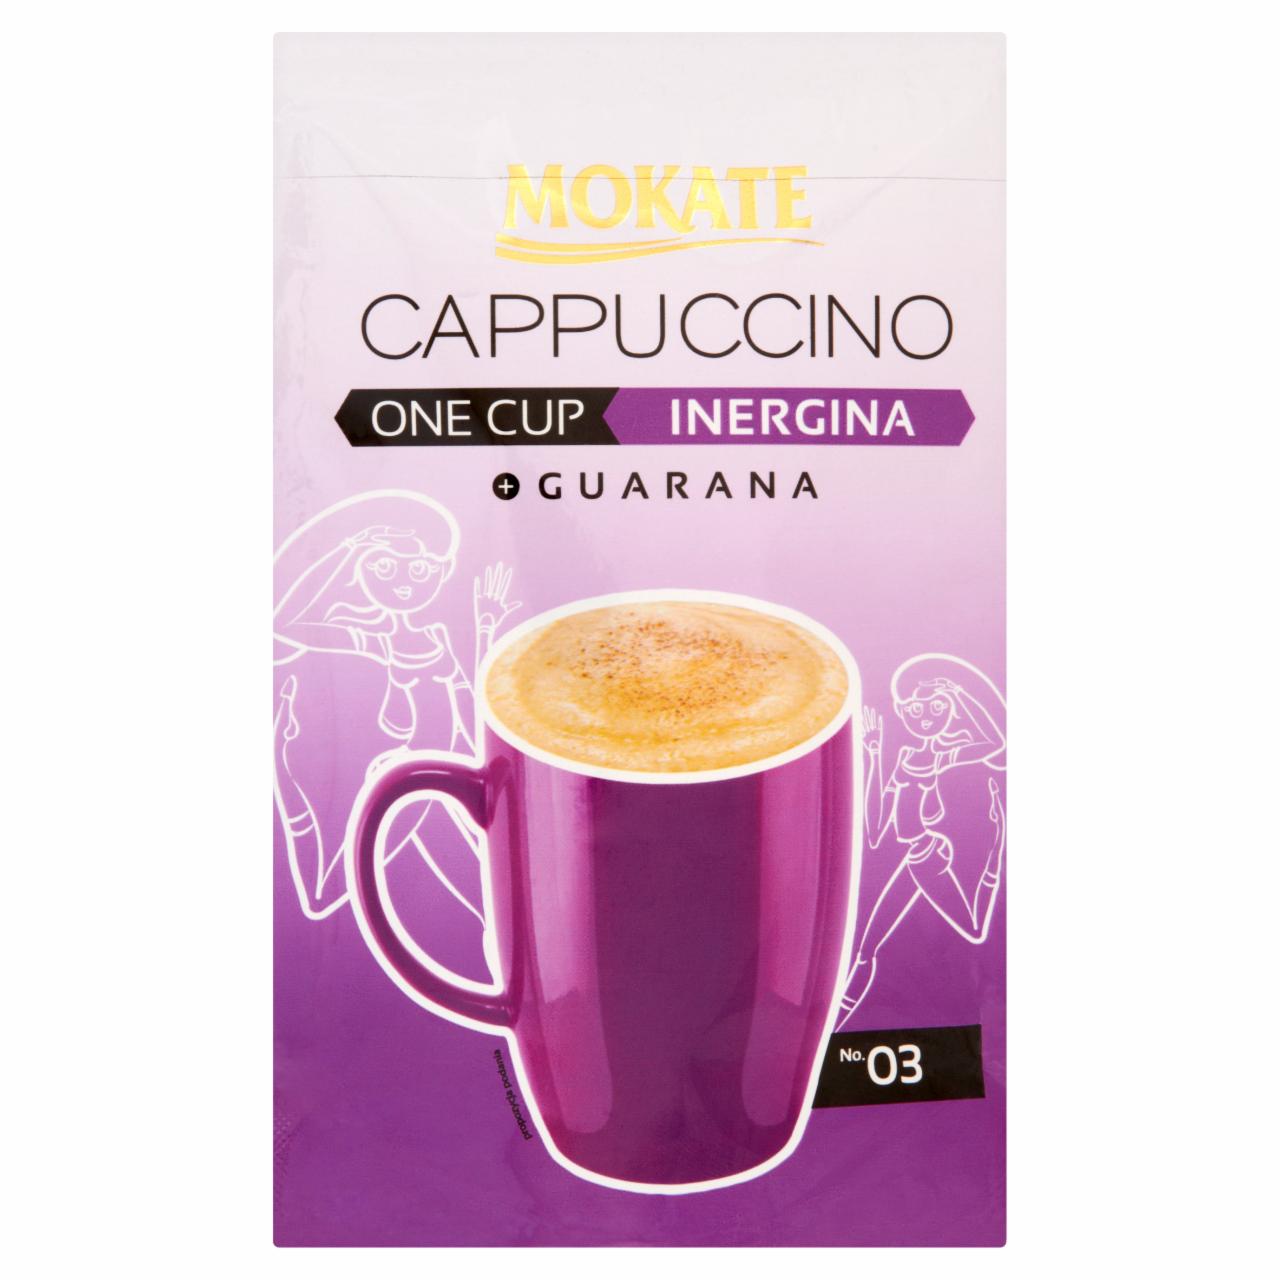 Zdjęcia - Mokate Cappuccino One Cup Inergina 20 g